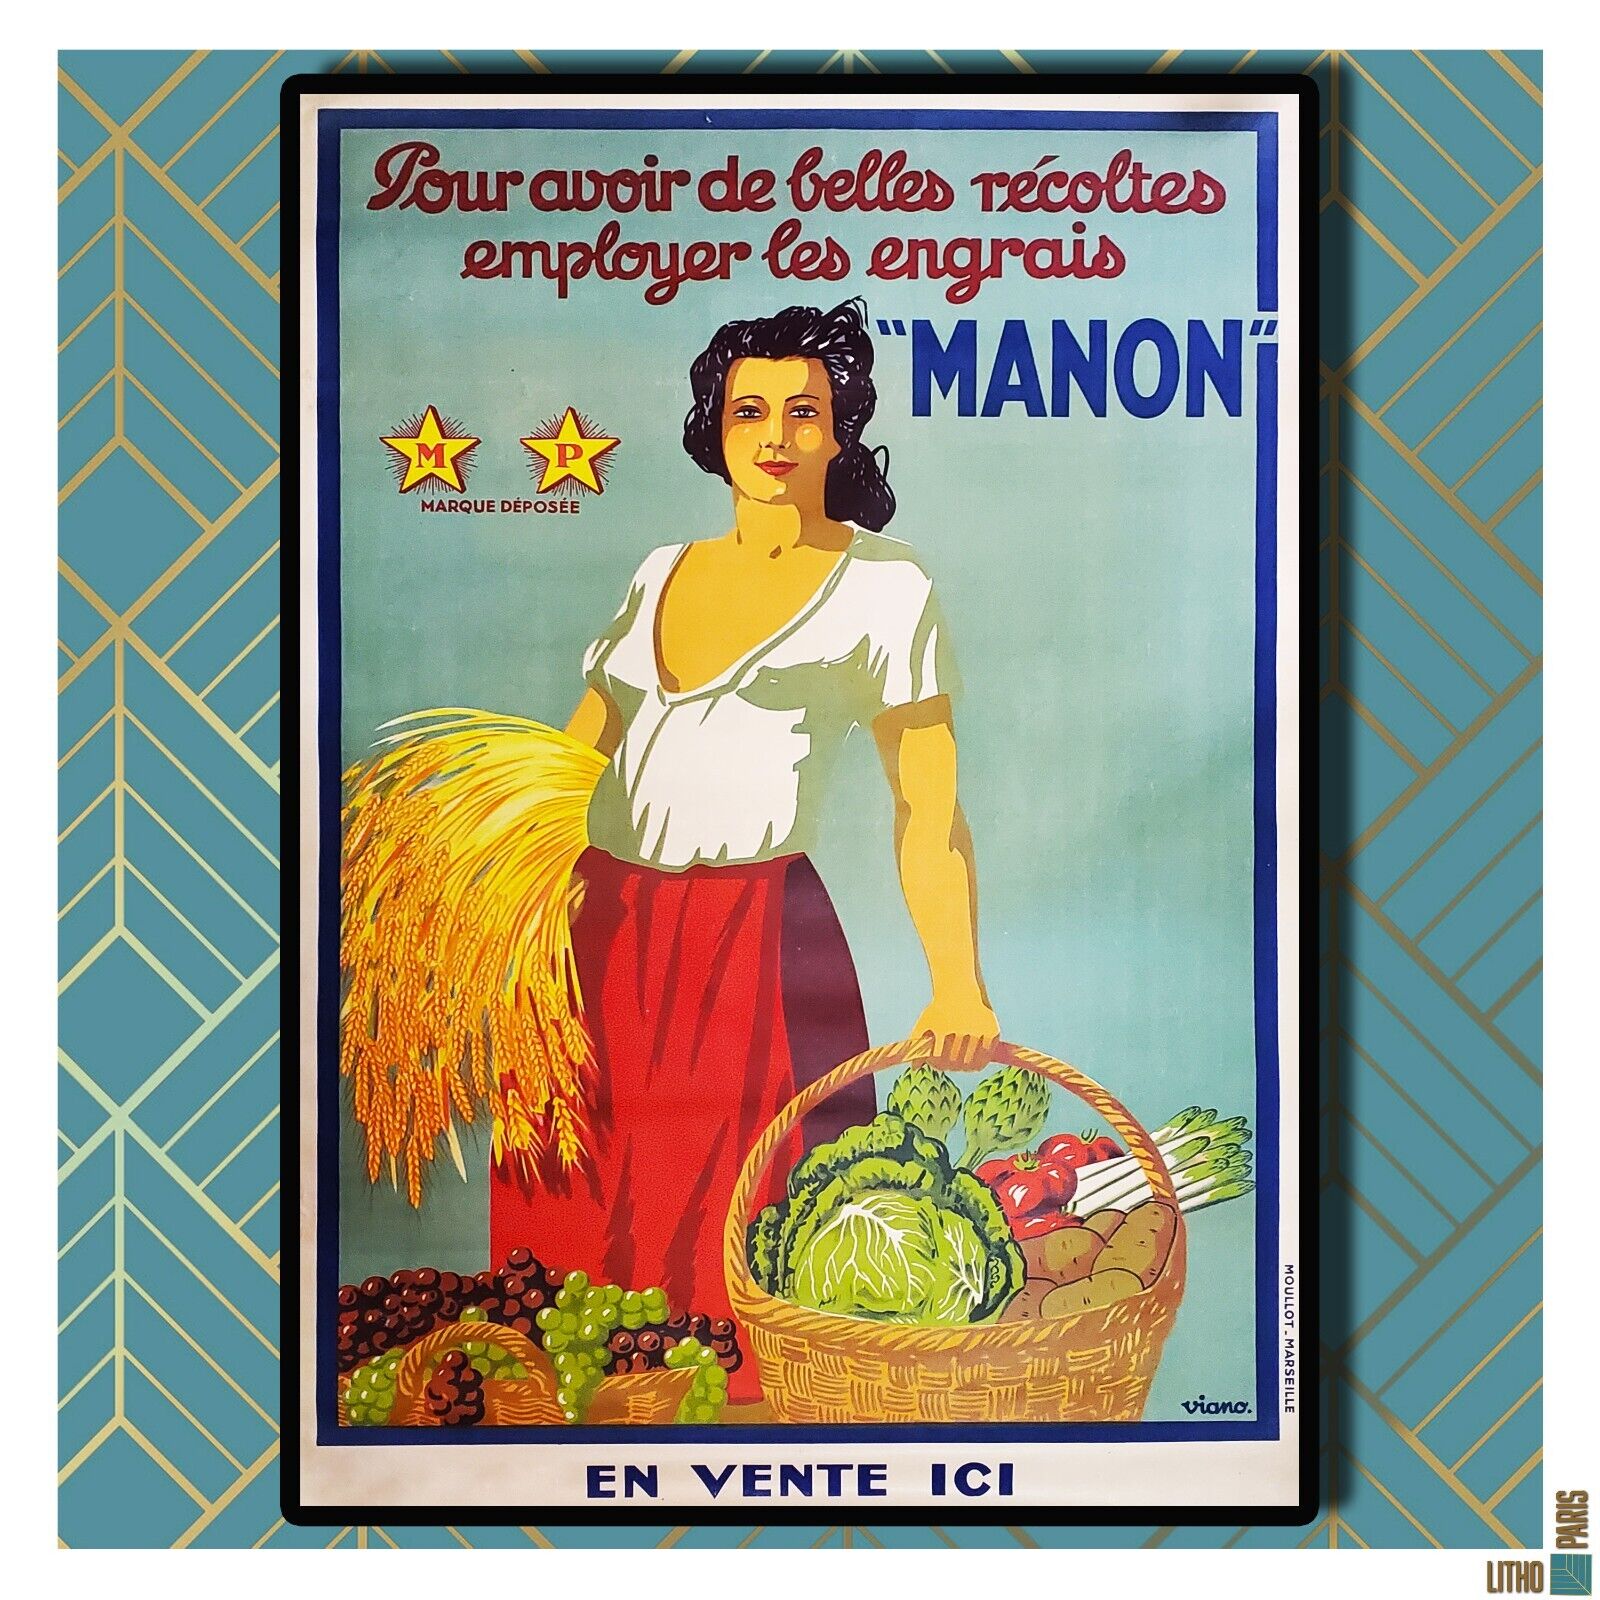 Advertising Posters/1930/ Viano/ Manon/ Women/ Angrais/ Vintage/ Original/ Rare